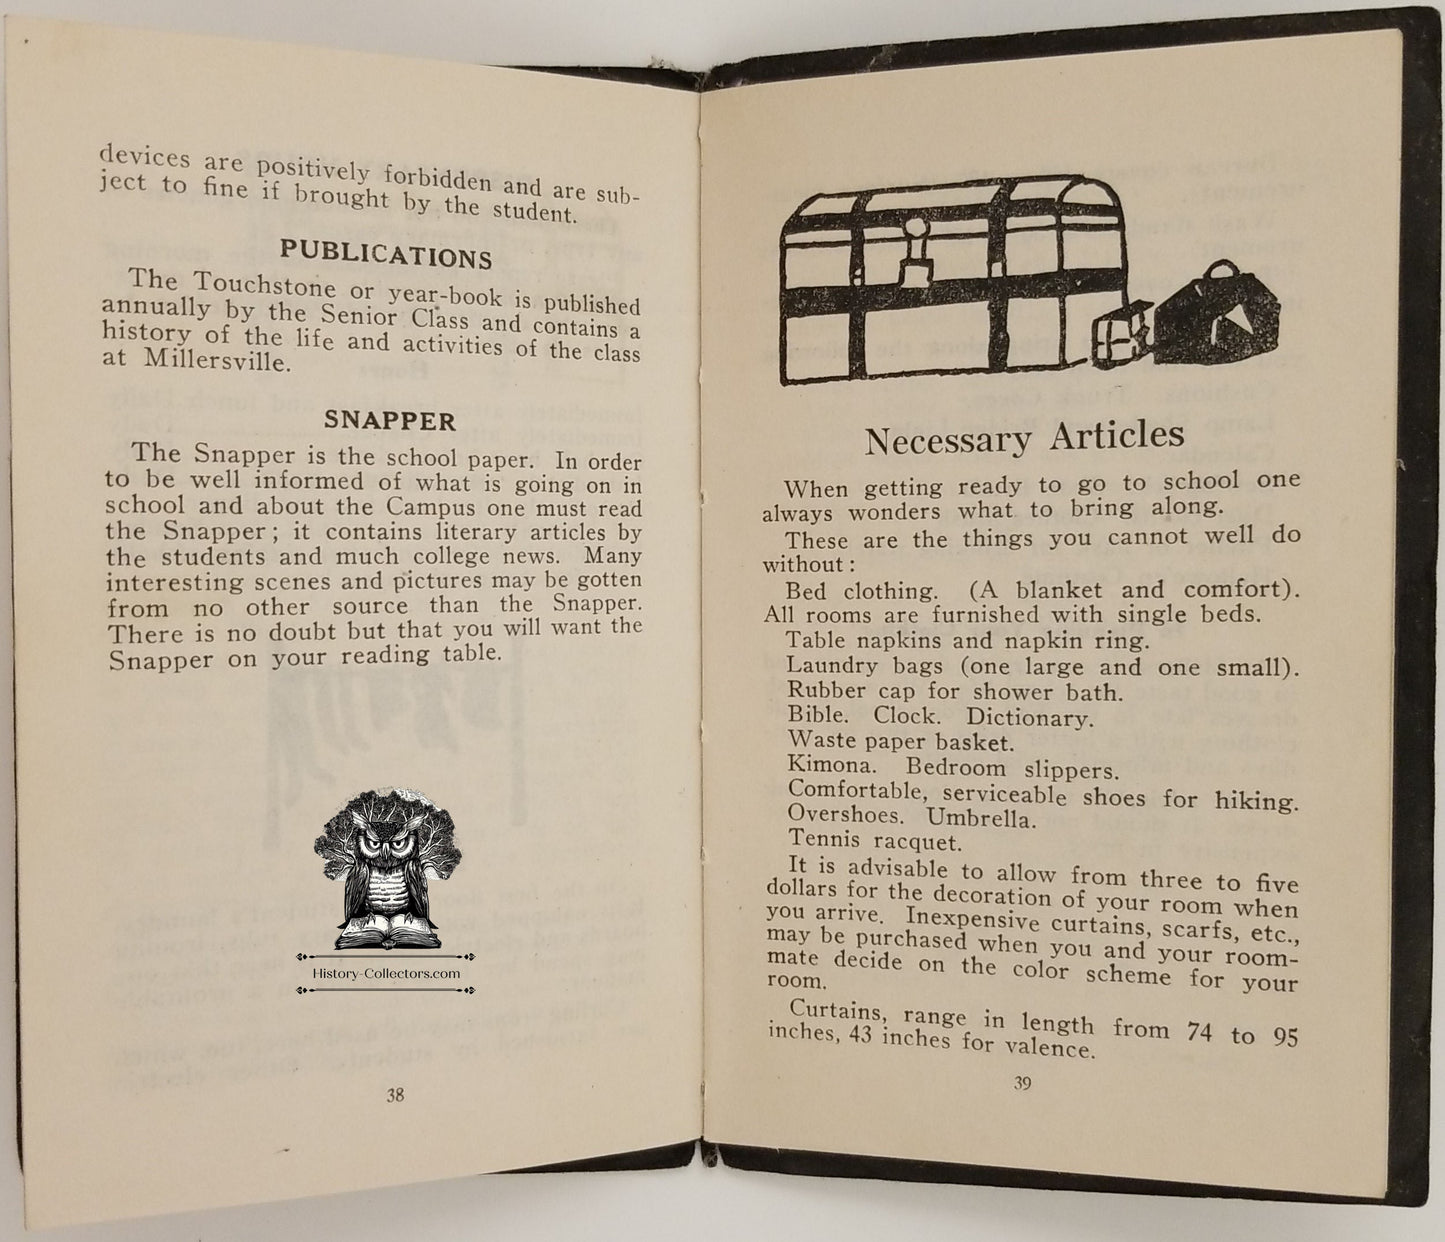 1933 Millersville State Teachers College Student Handbook Pennsylvania